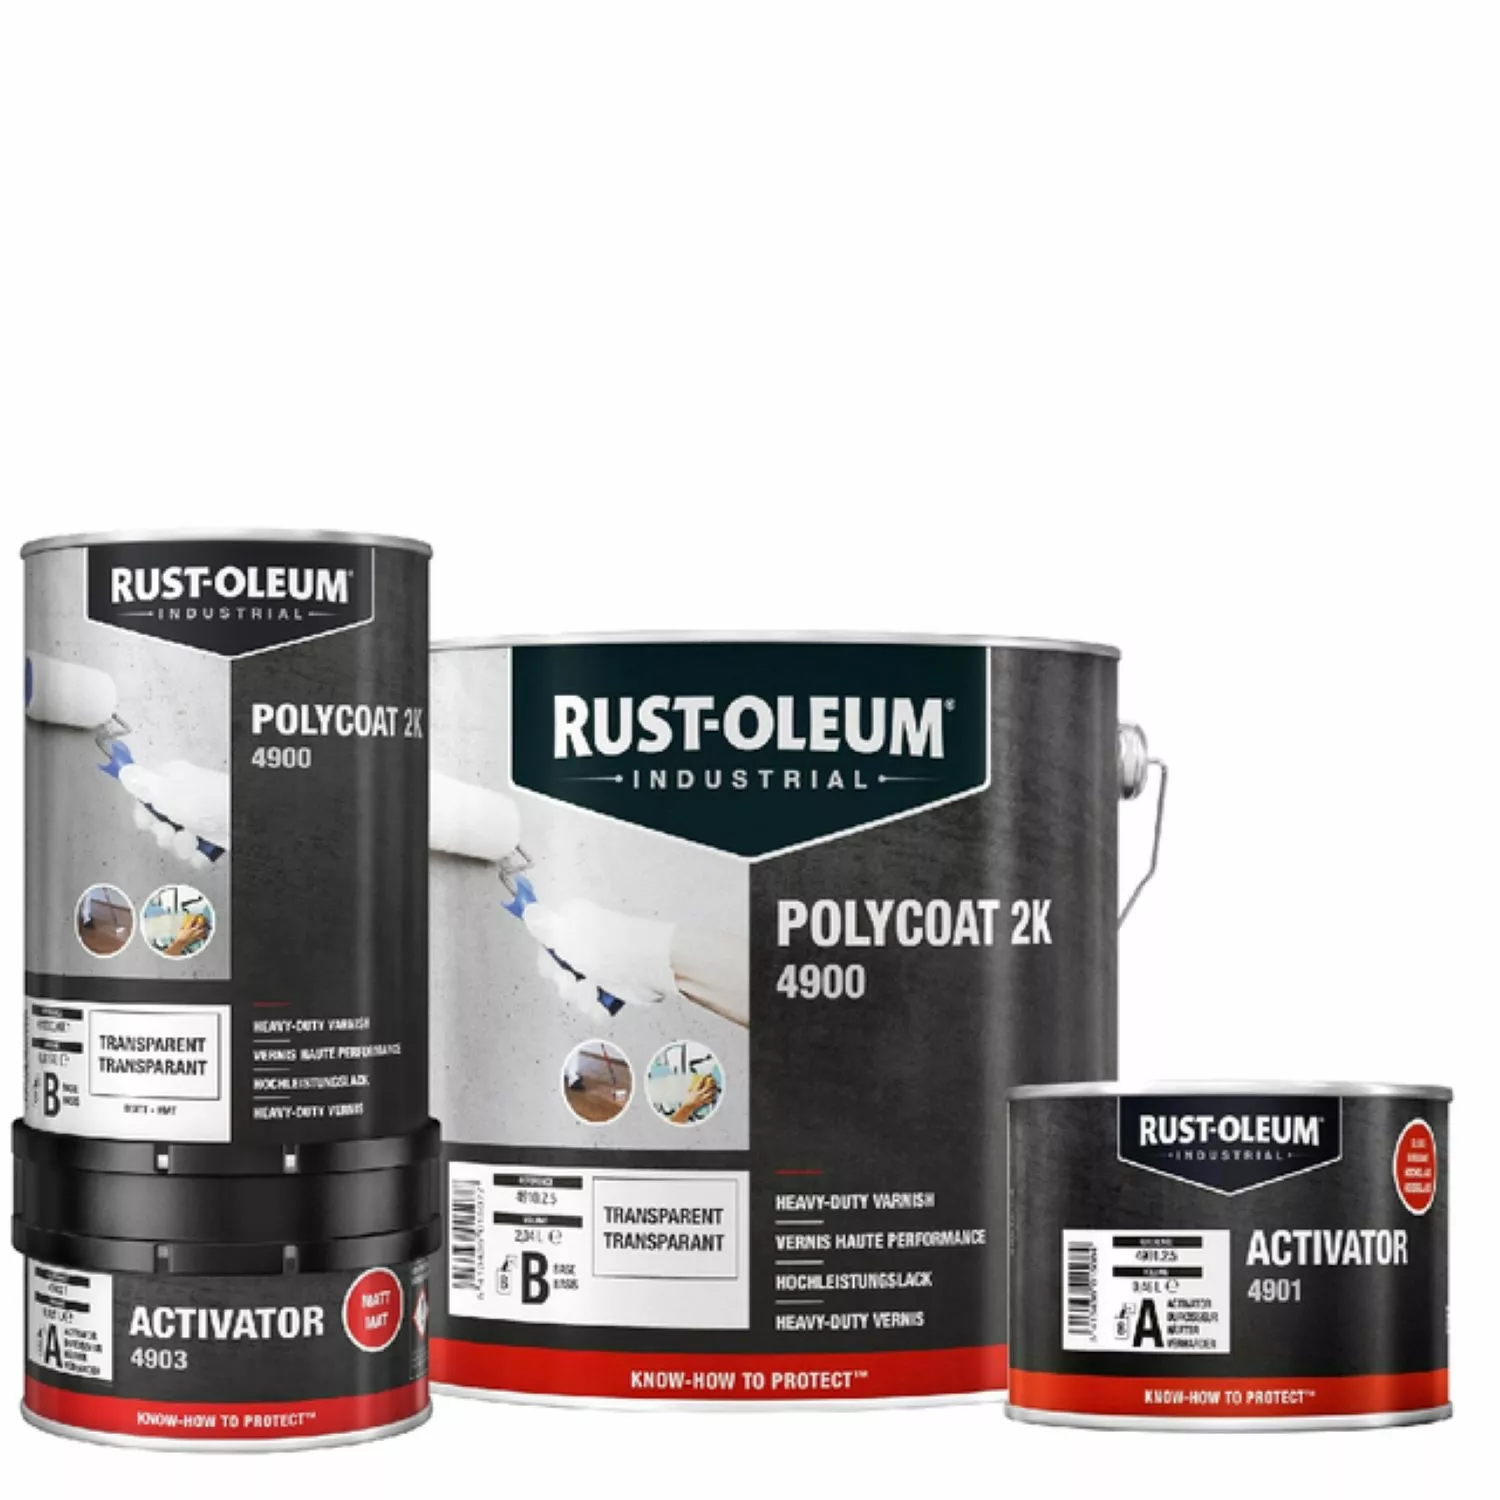 Rust-Oleum Polycoat 2K Heavy-Duty vernis - 2.5L-image